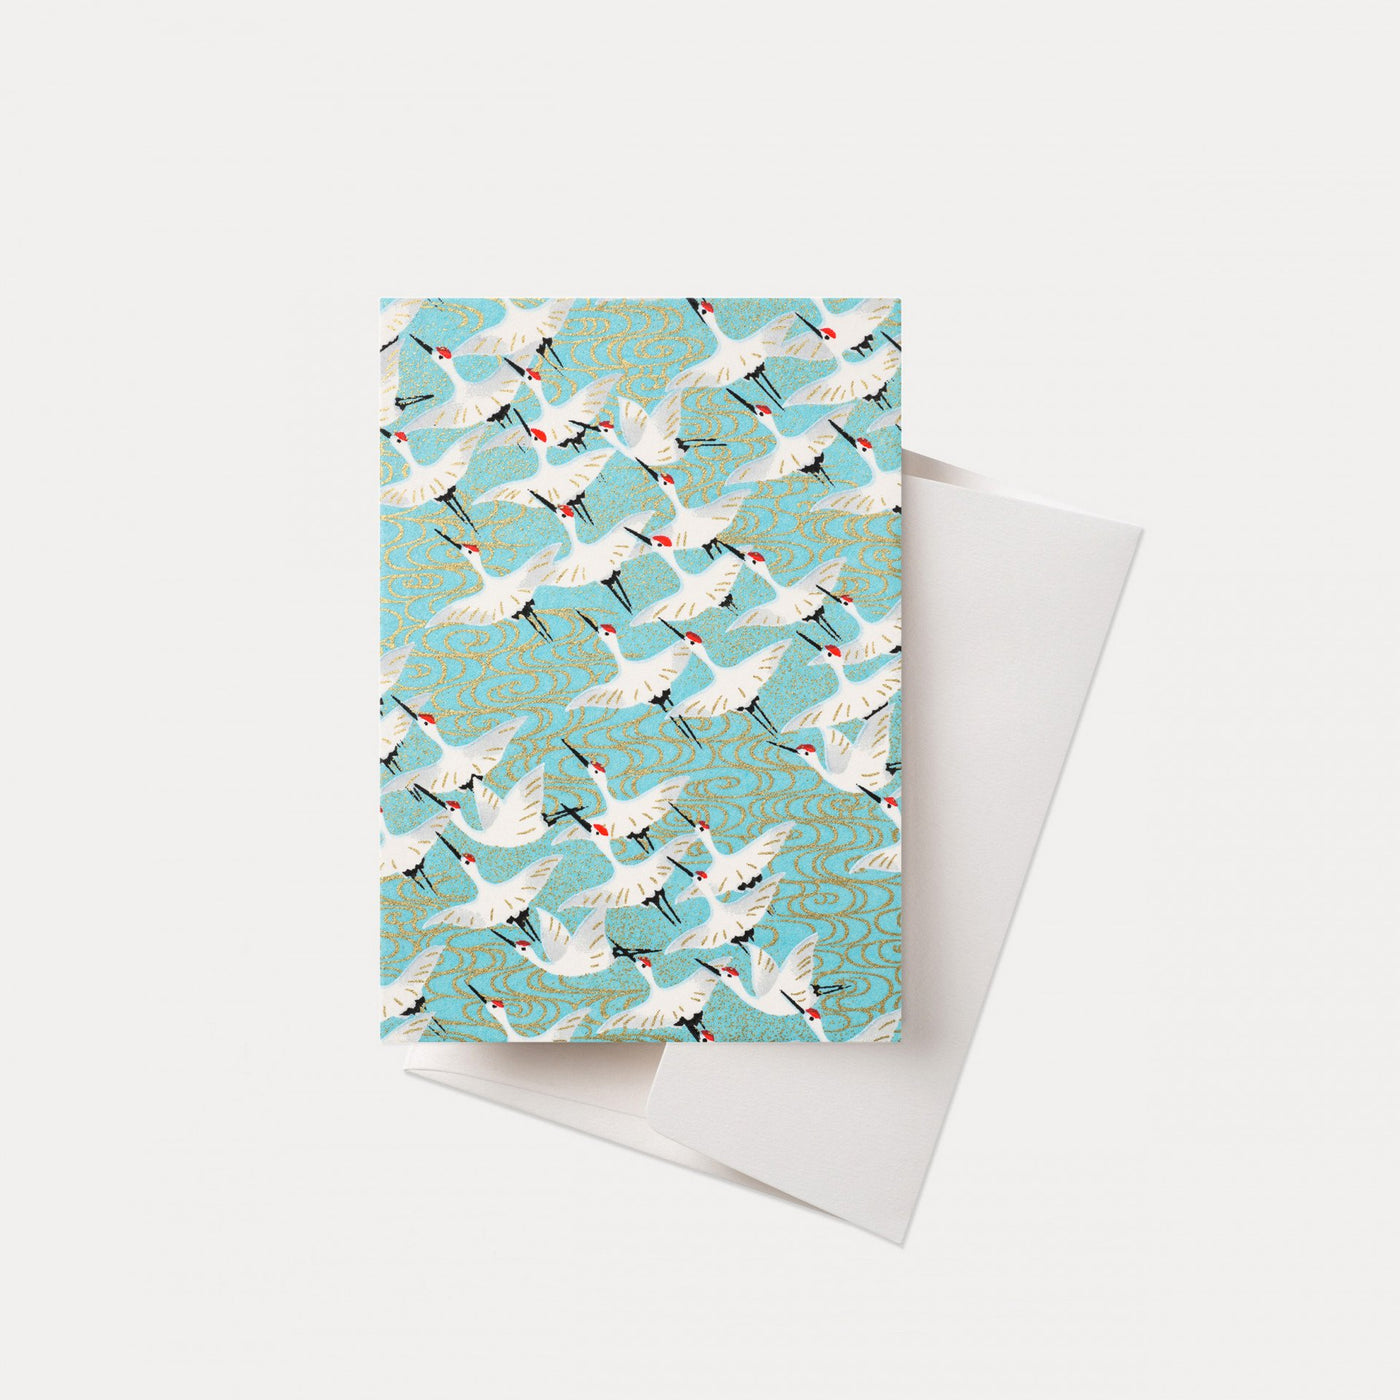 Esmie Greeting Card - White Cranes / Blue